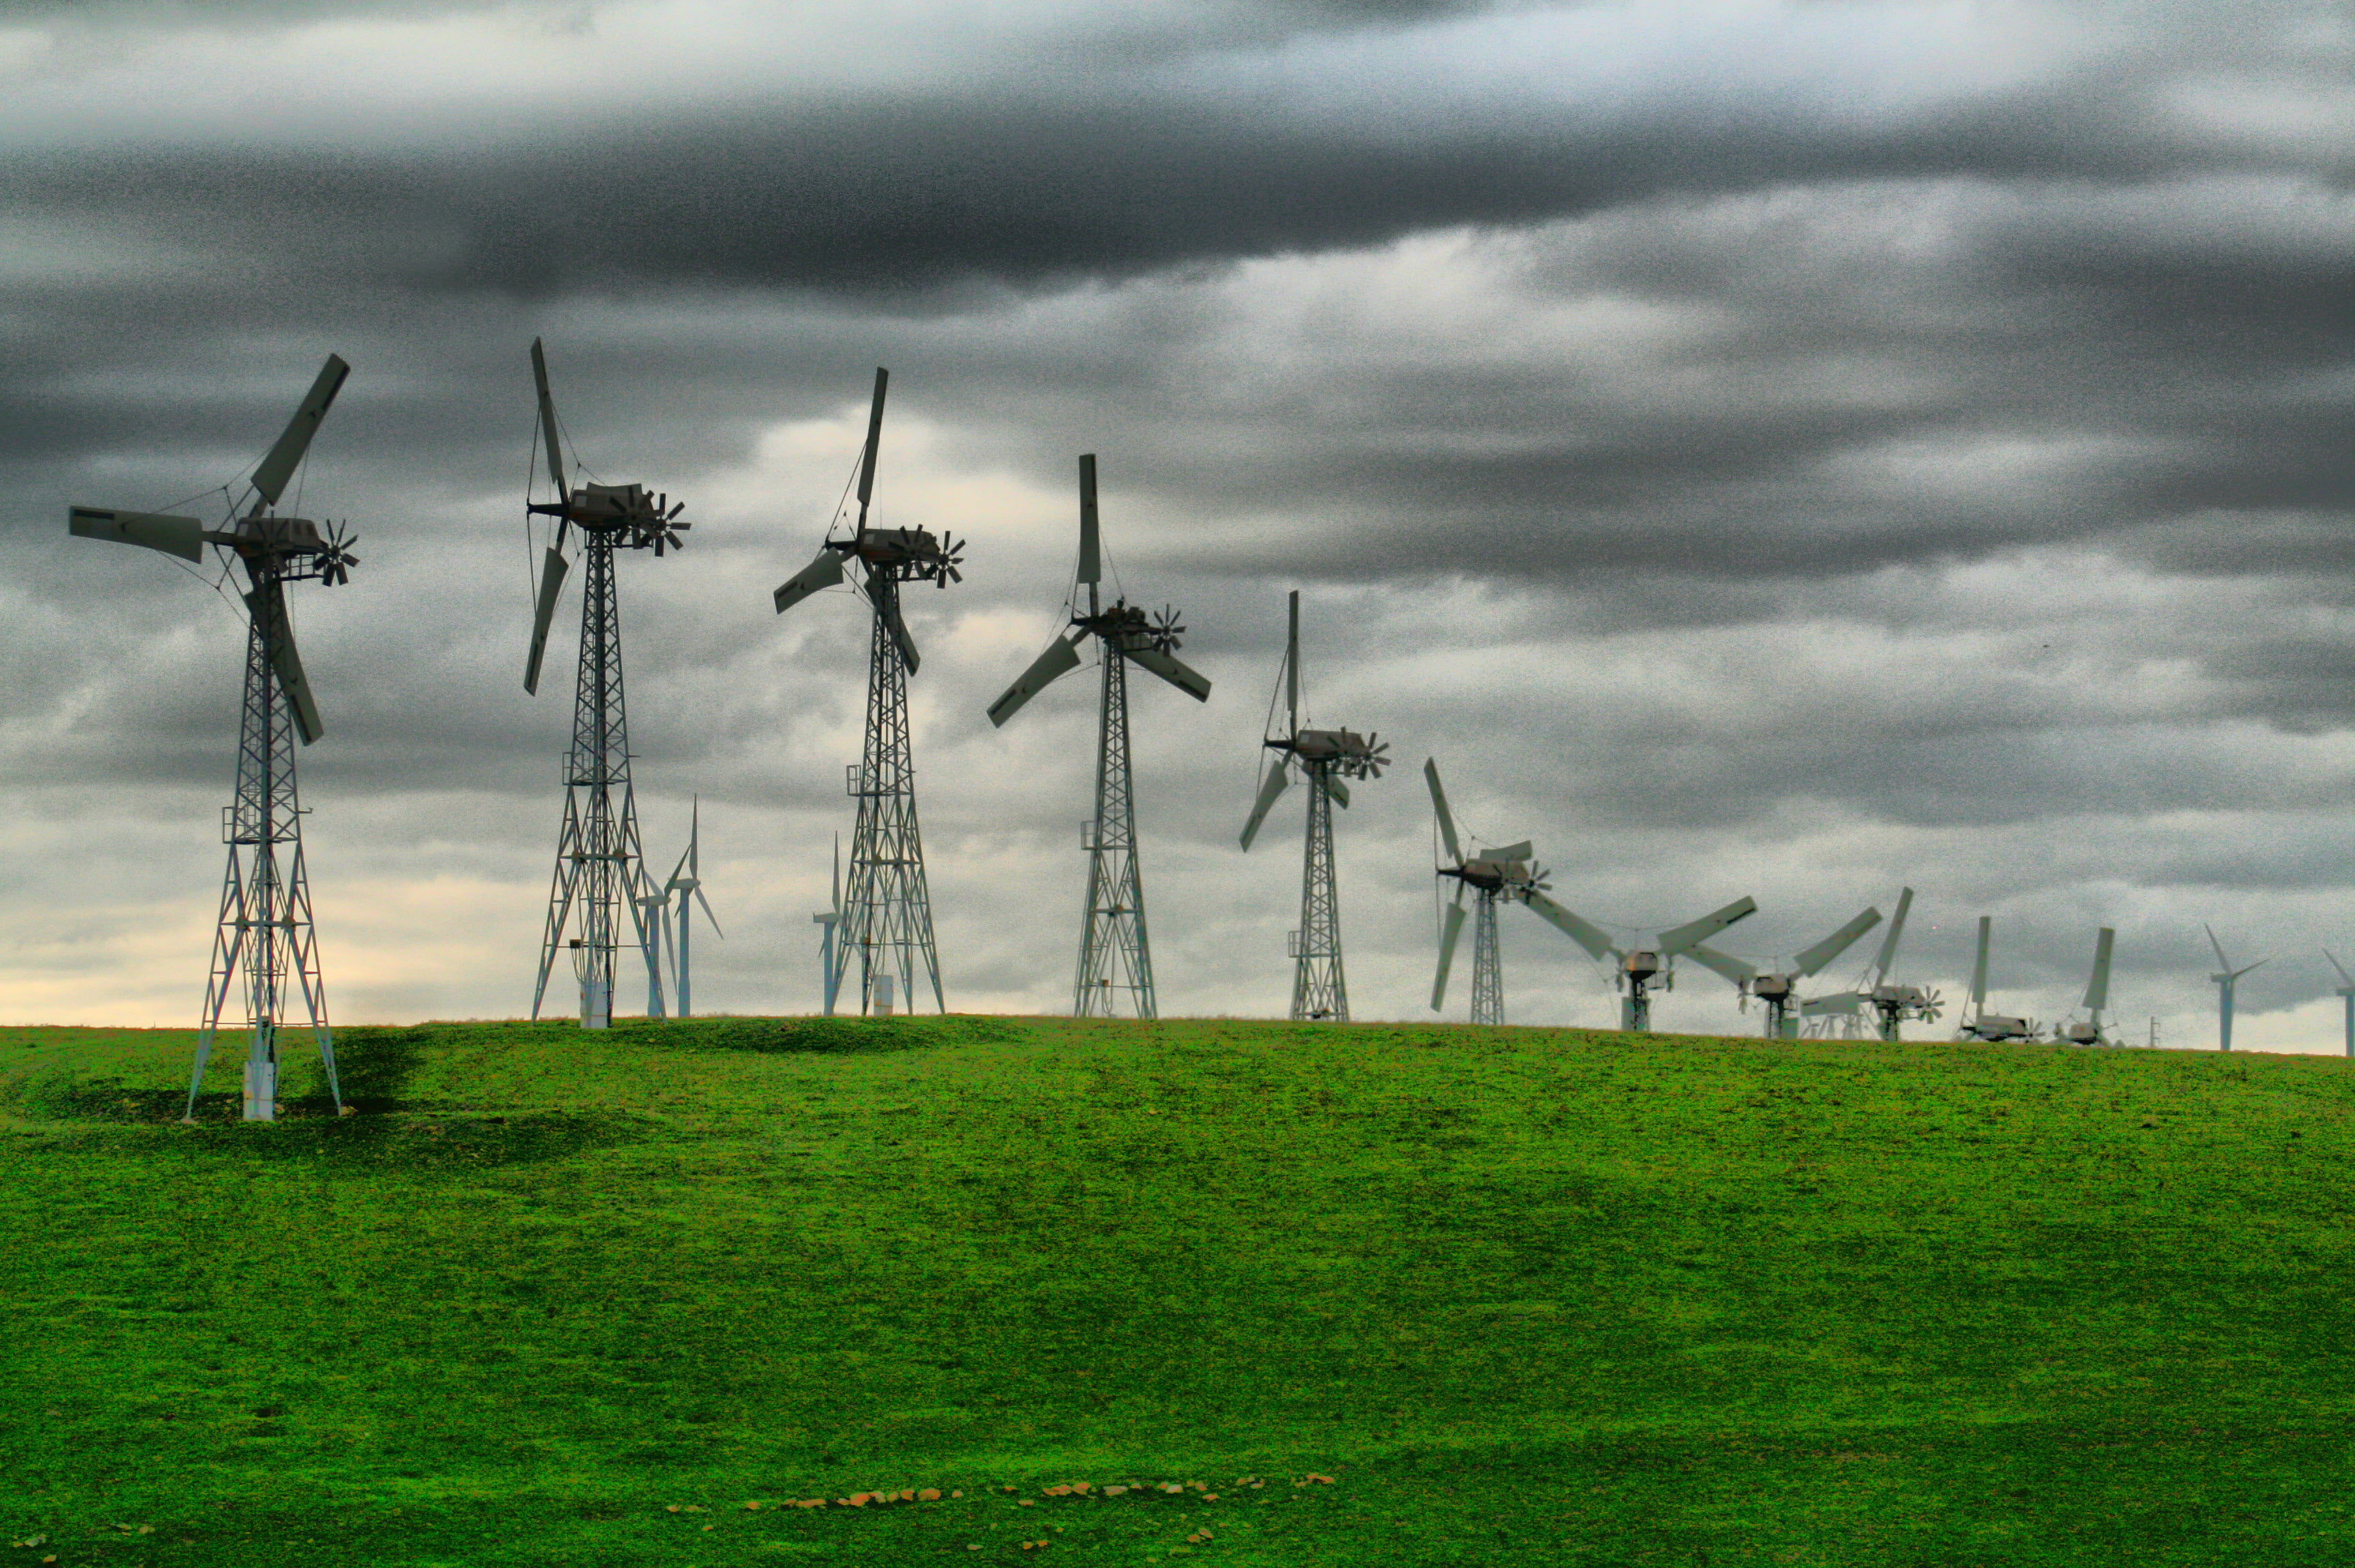 grey windmills on green grass field under cloudy sky, Northern California